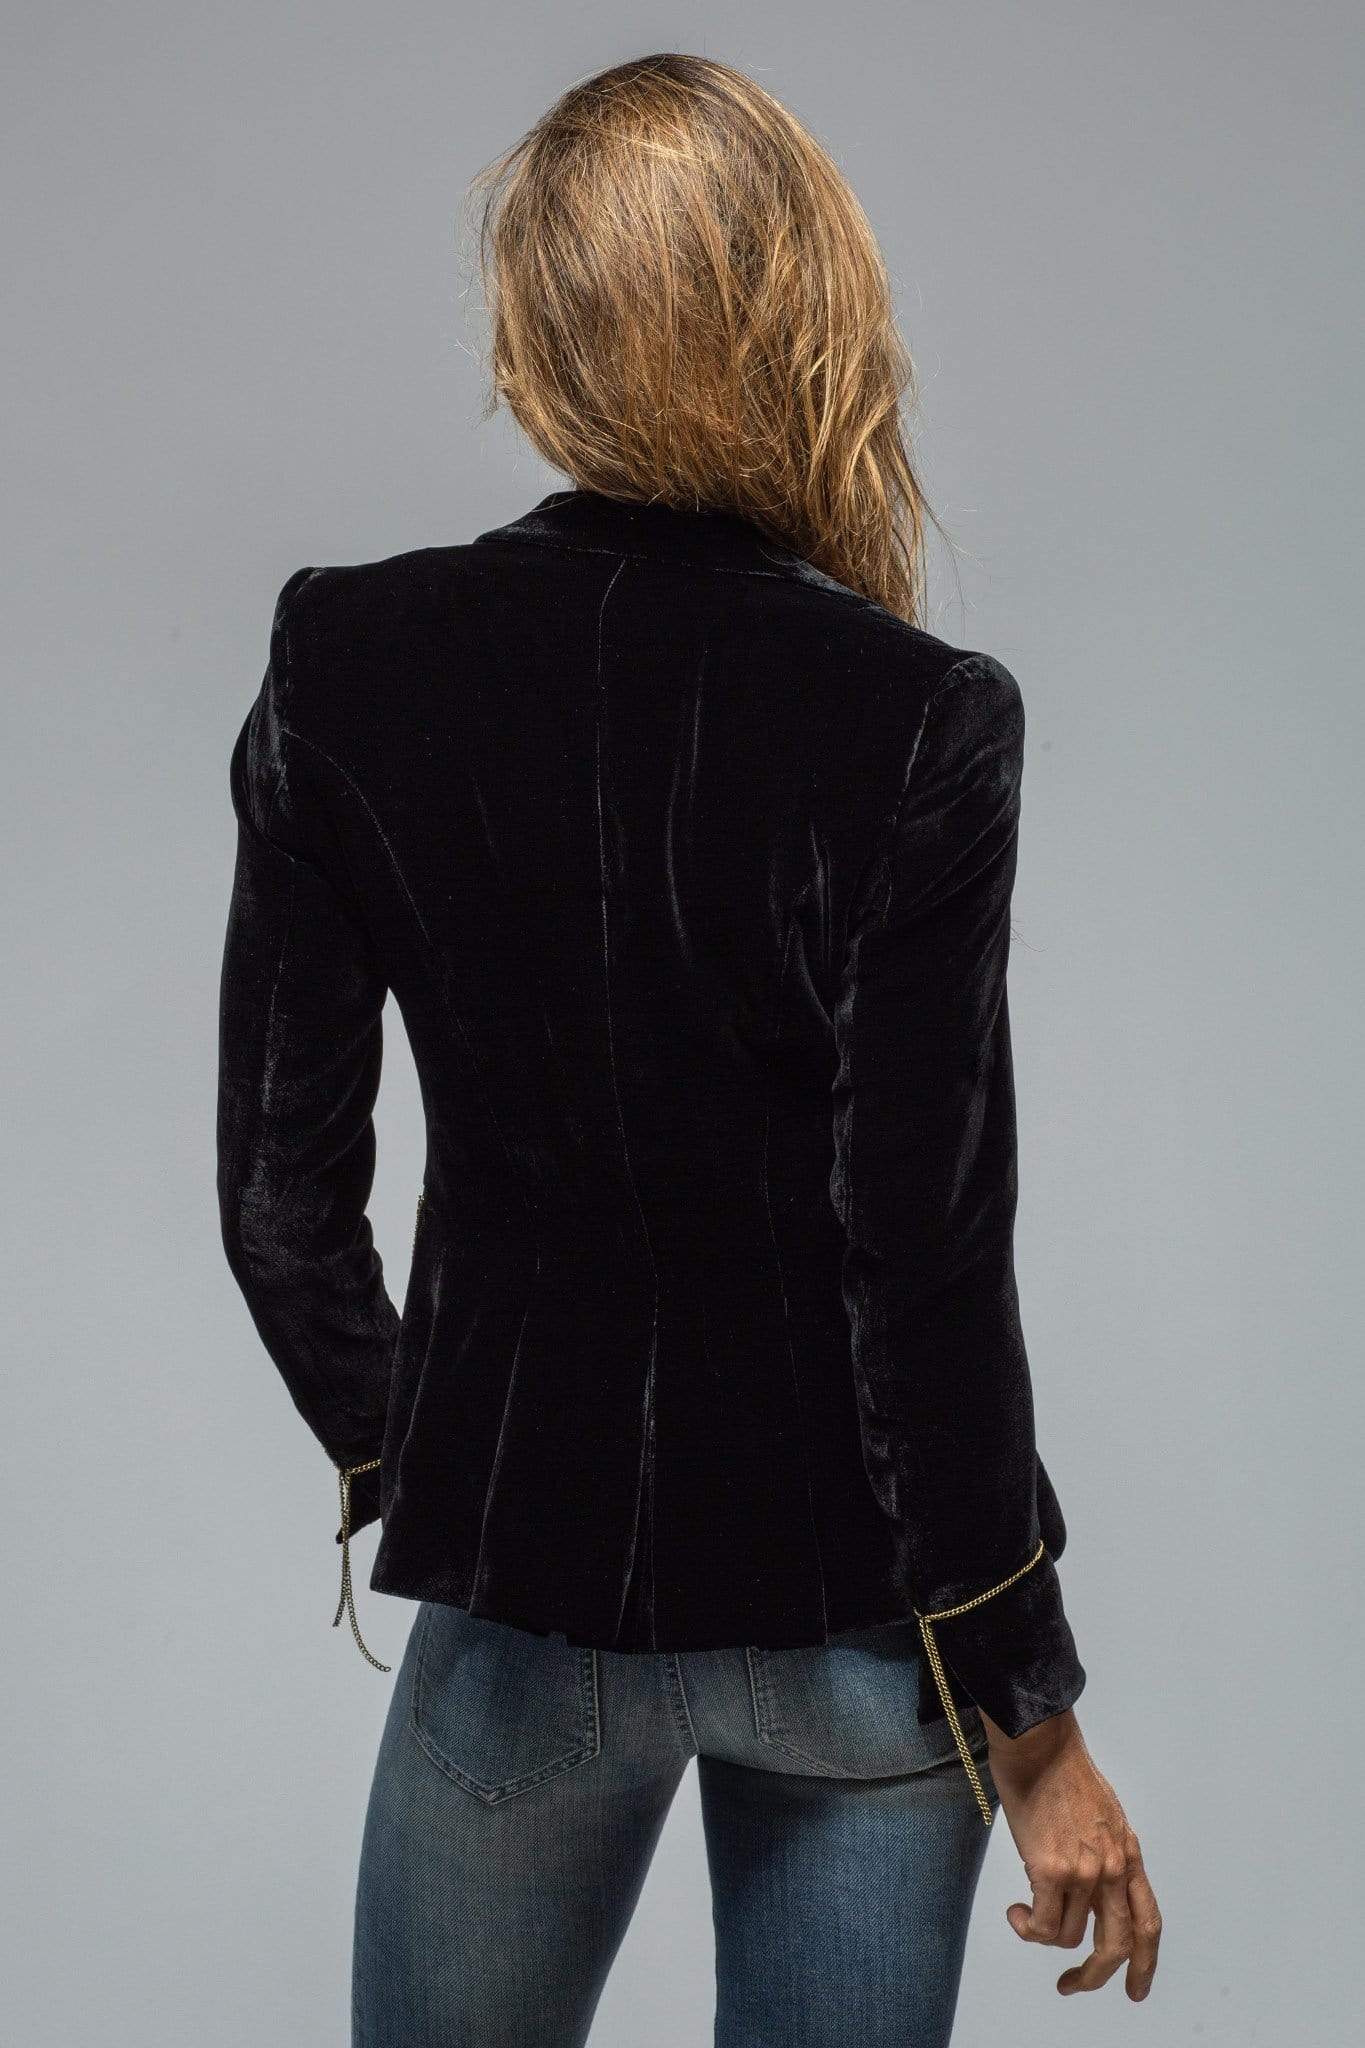 Mariane Rock Jacket In Black Velvet - AXEL'S